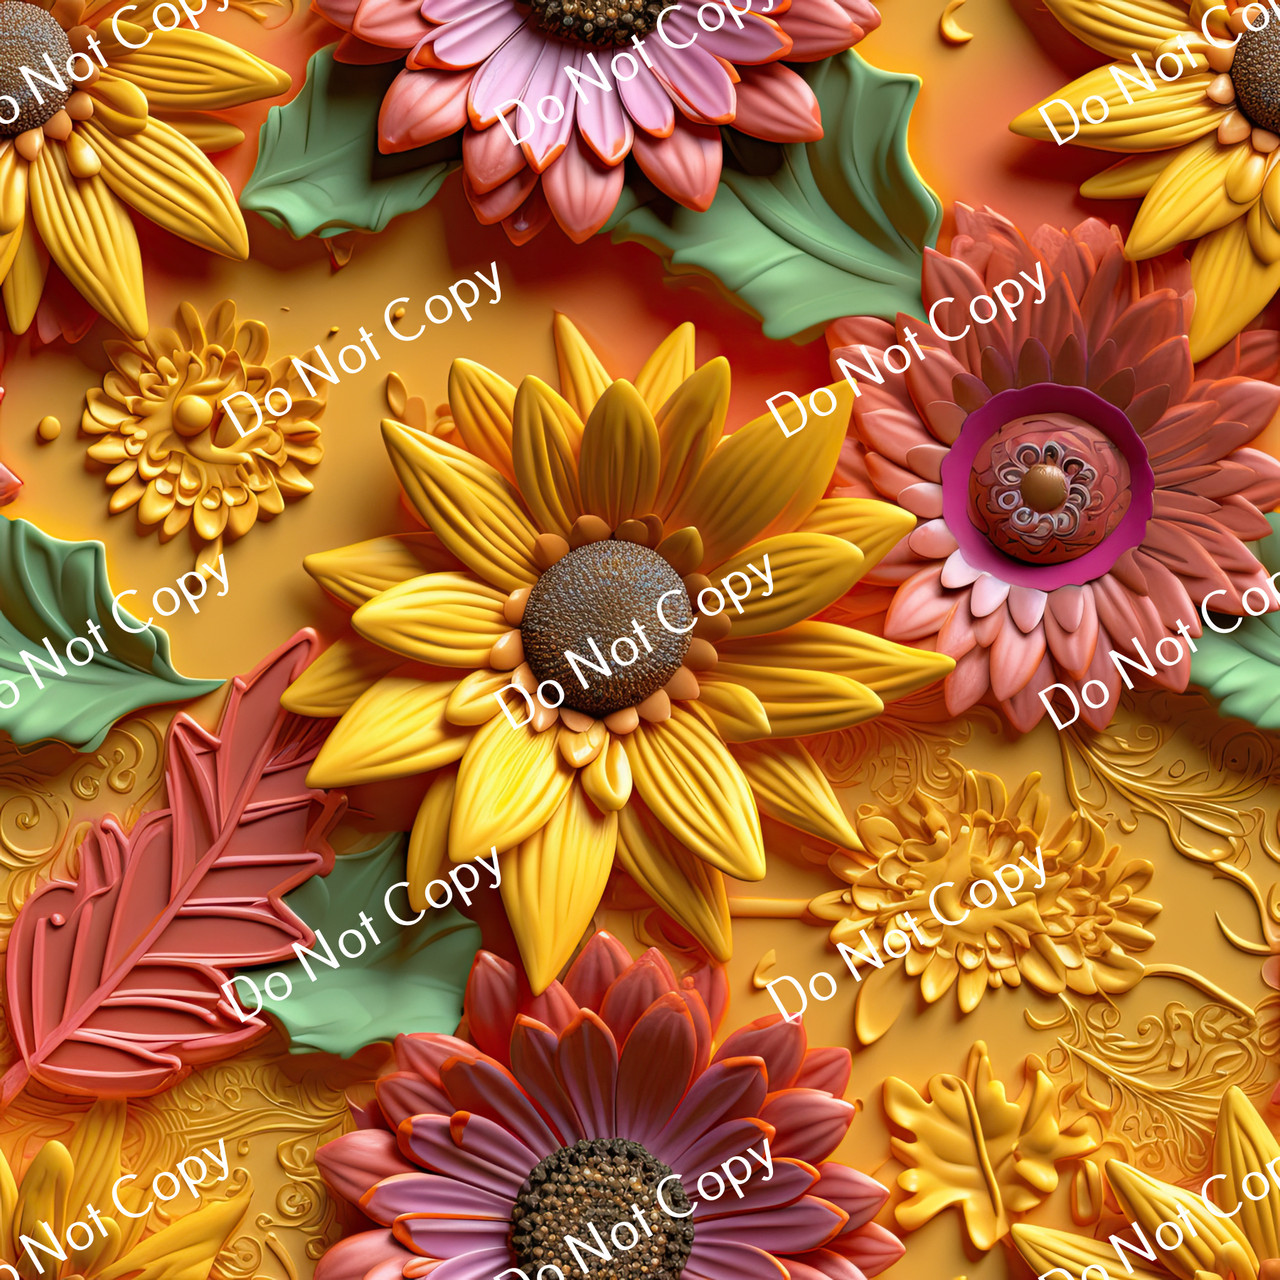 Printed Pattern Vinyl | 3D Sunflowers 5